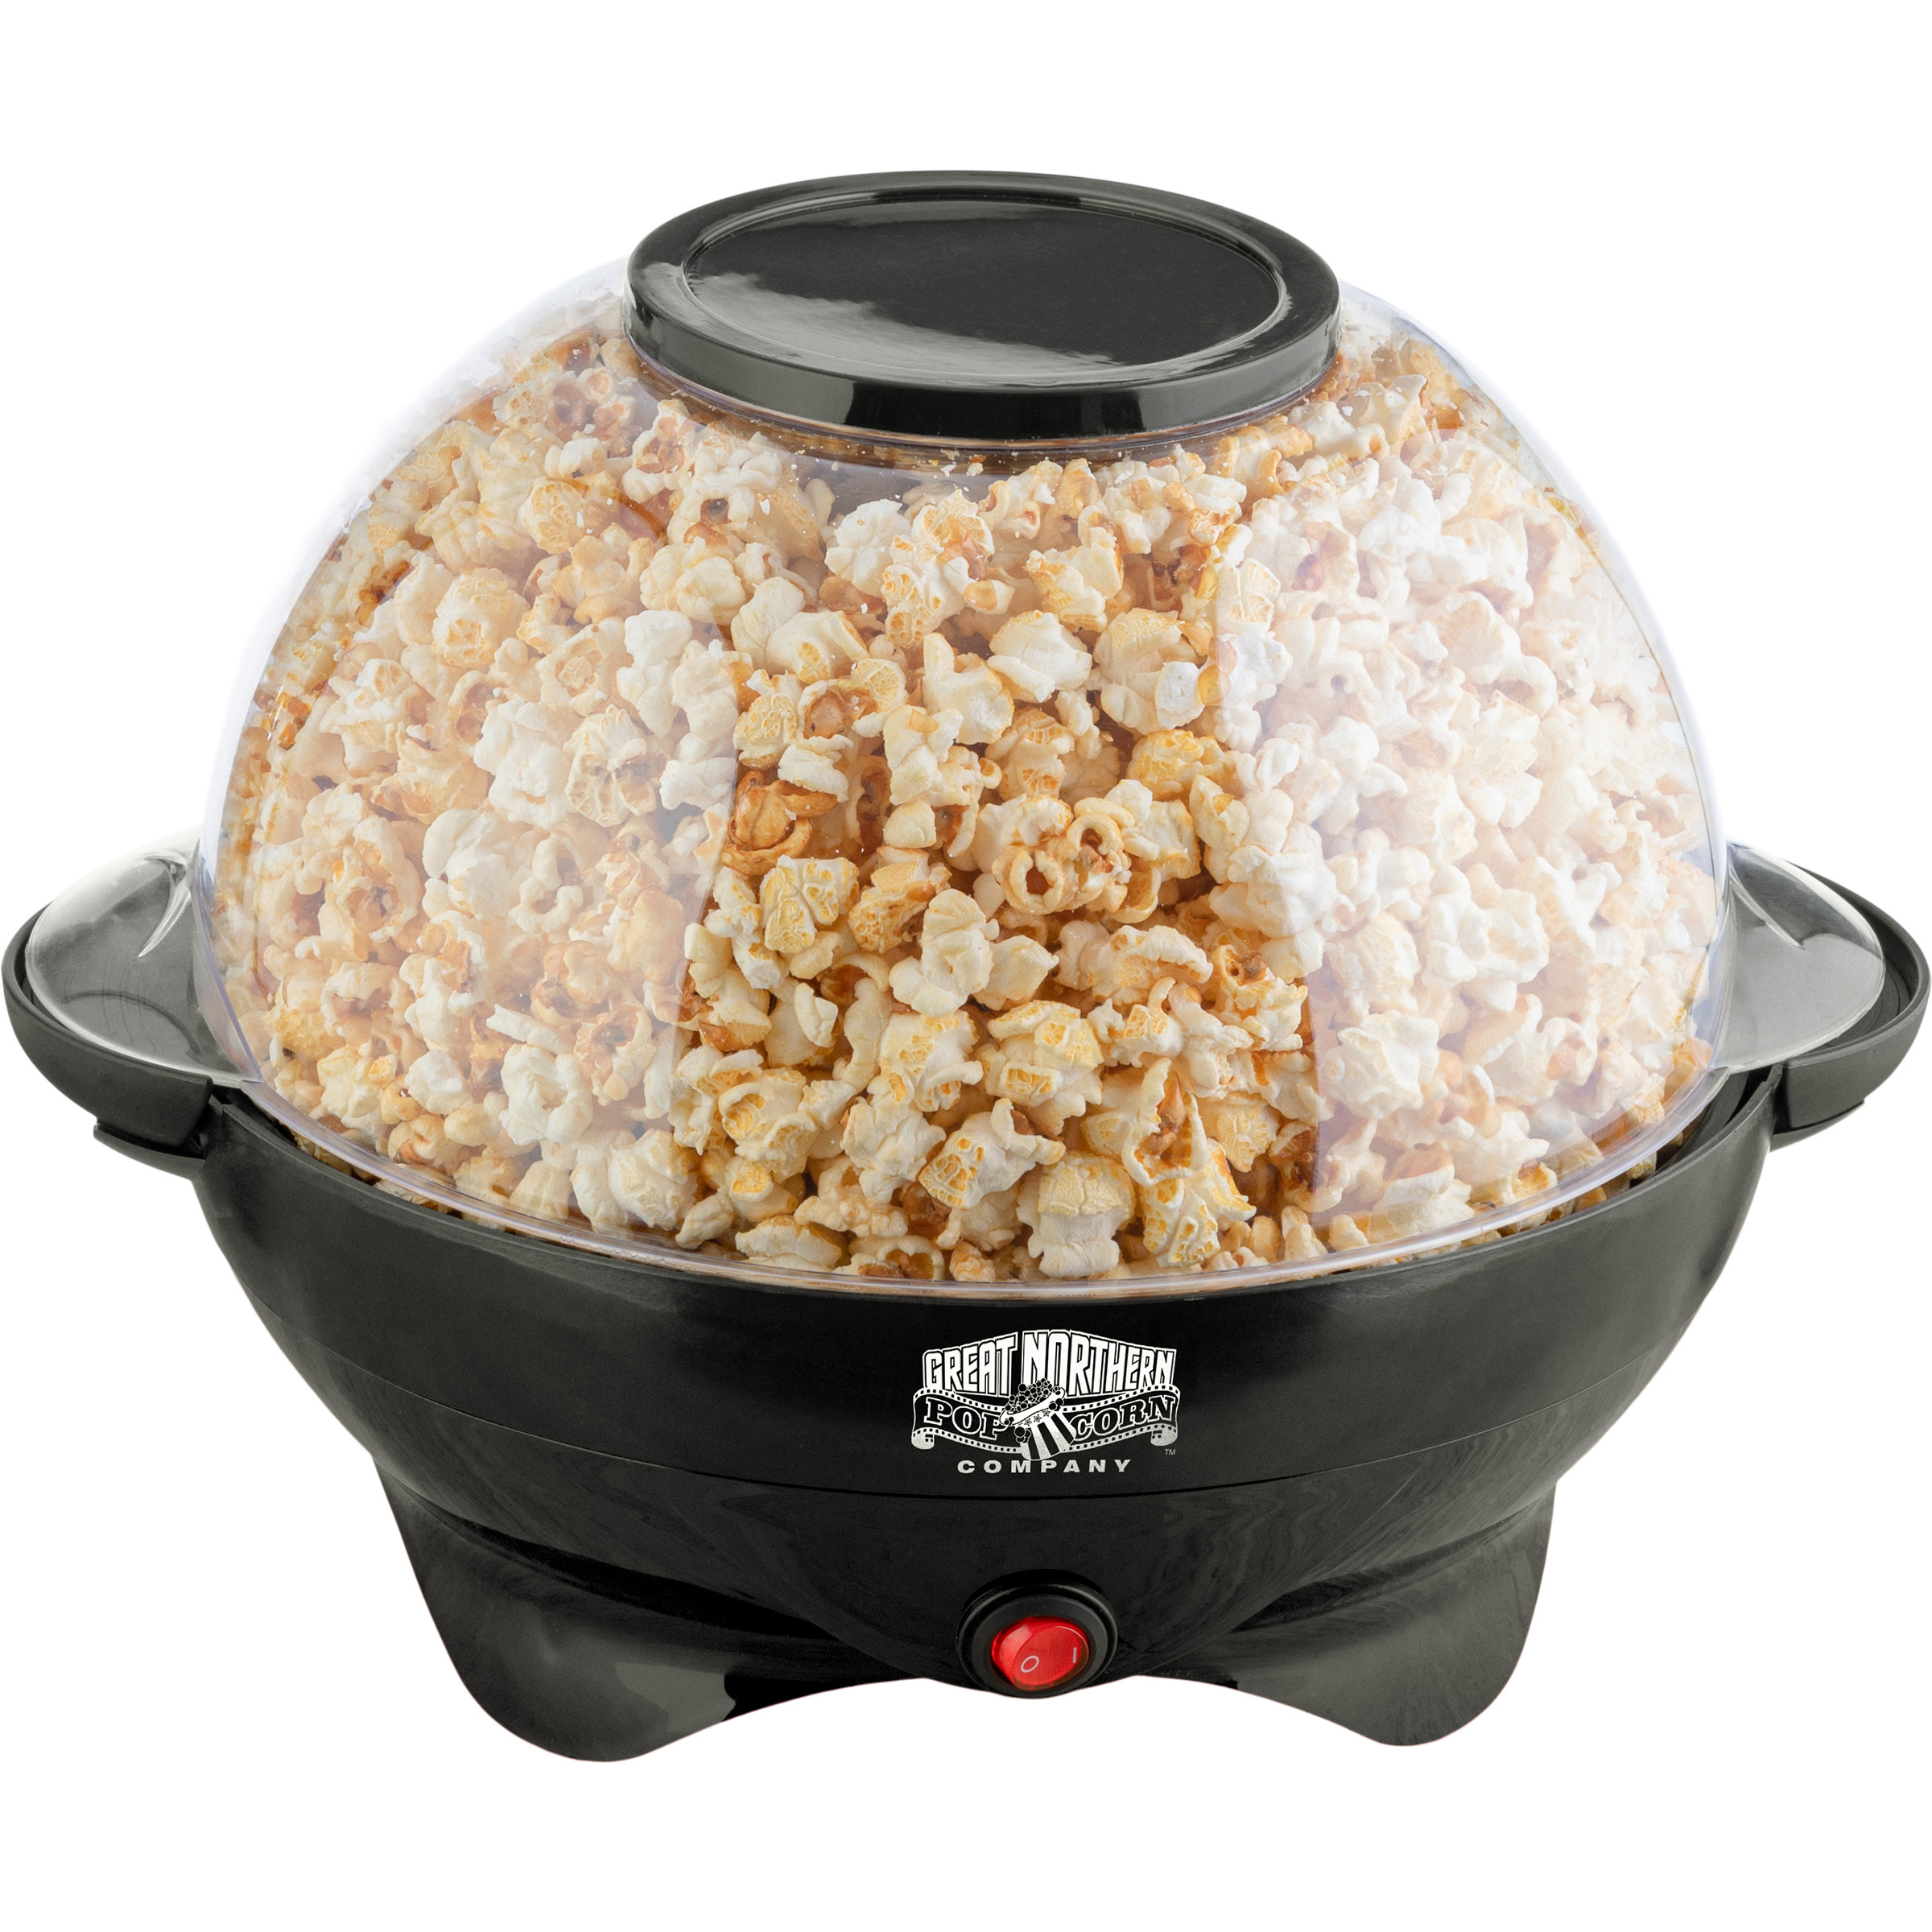 Electric Pop And Stir Popcorn Maker Machine With Built-In Stirrer And Serving Bowl - Black